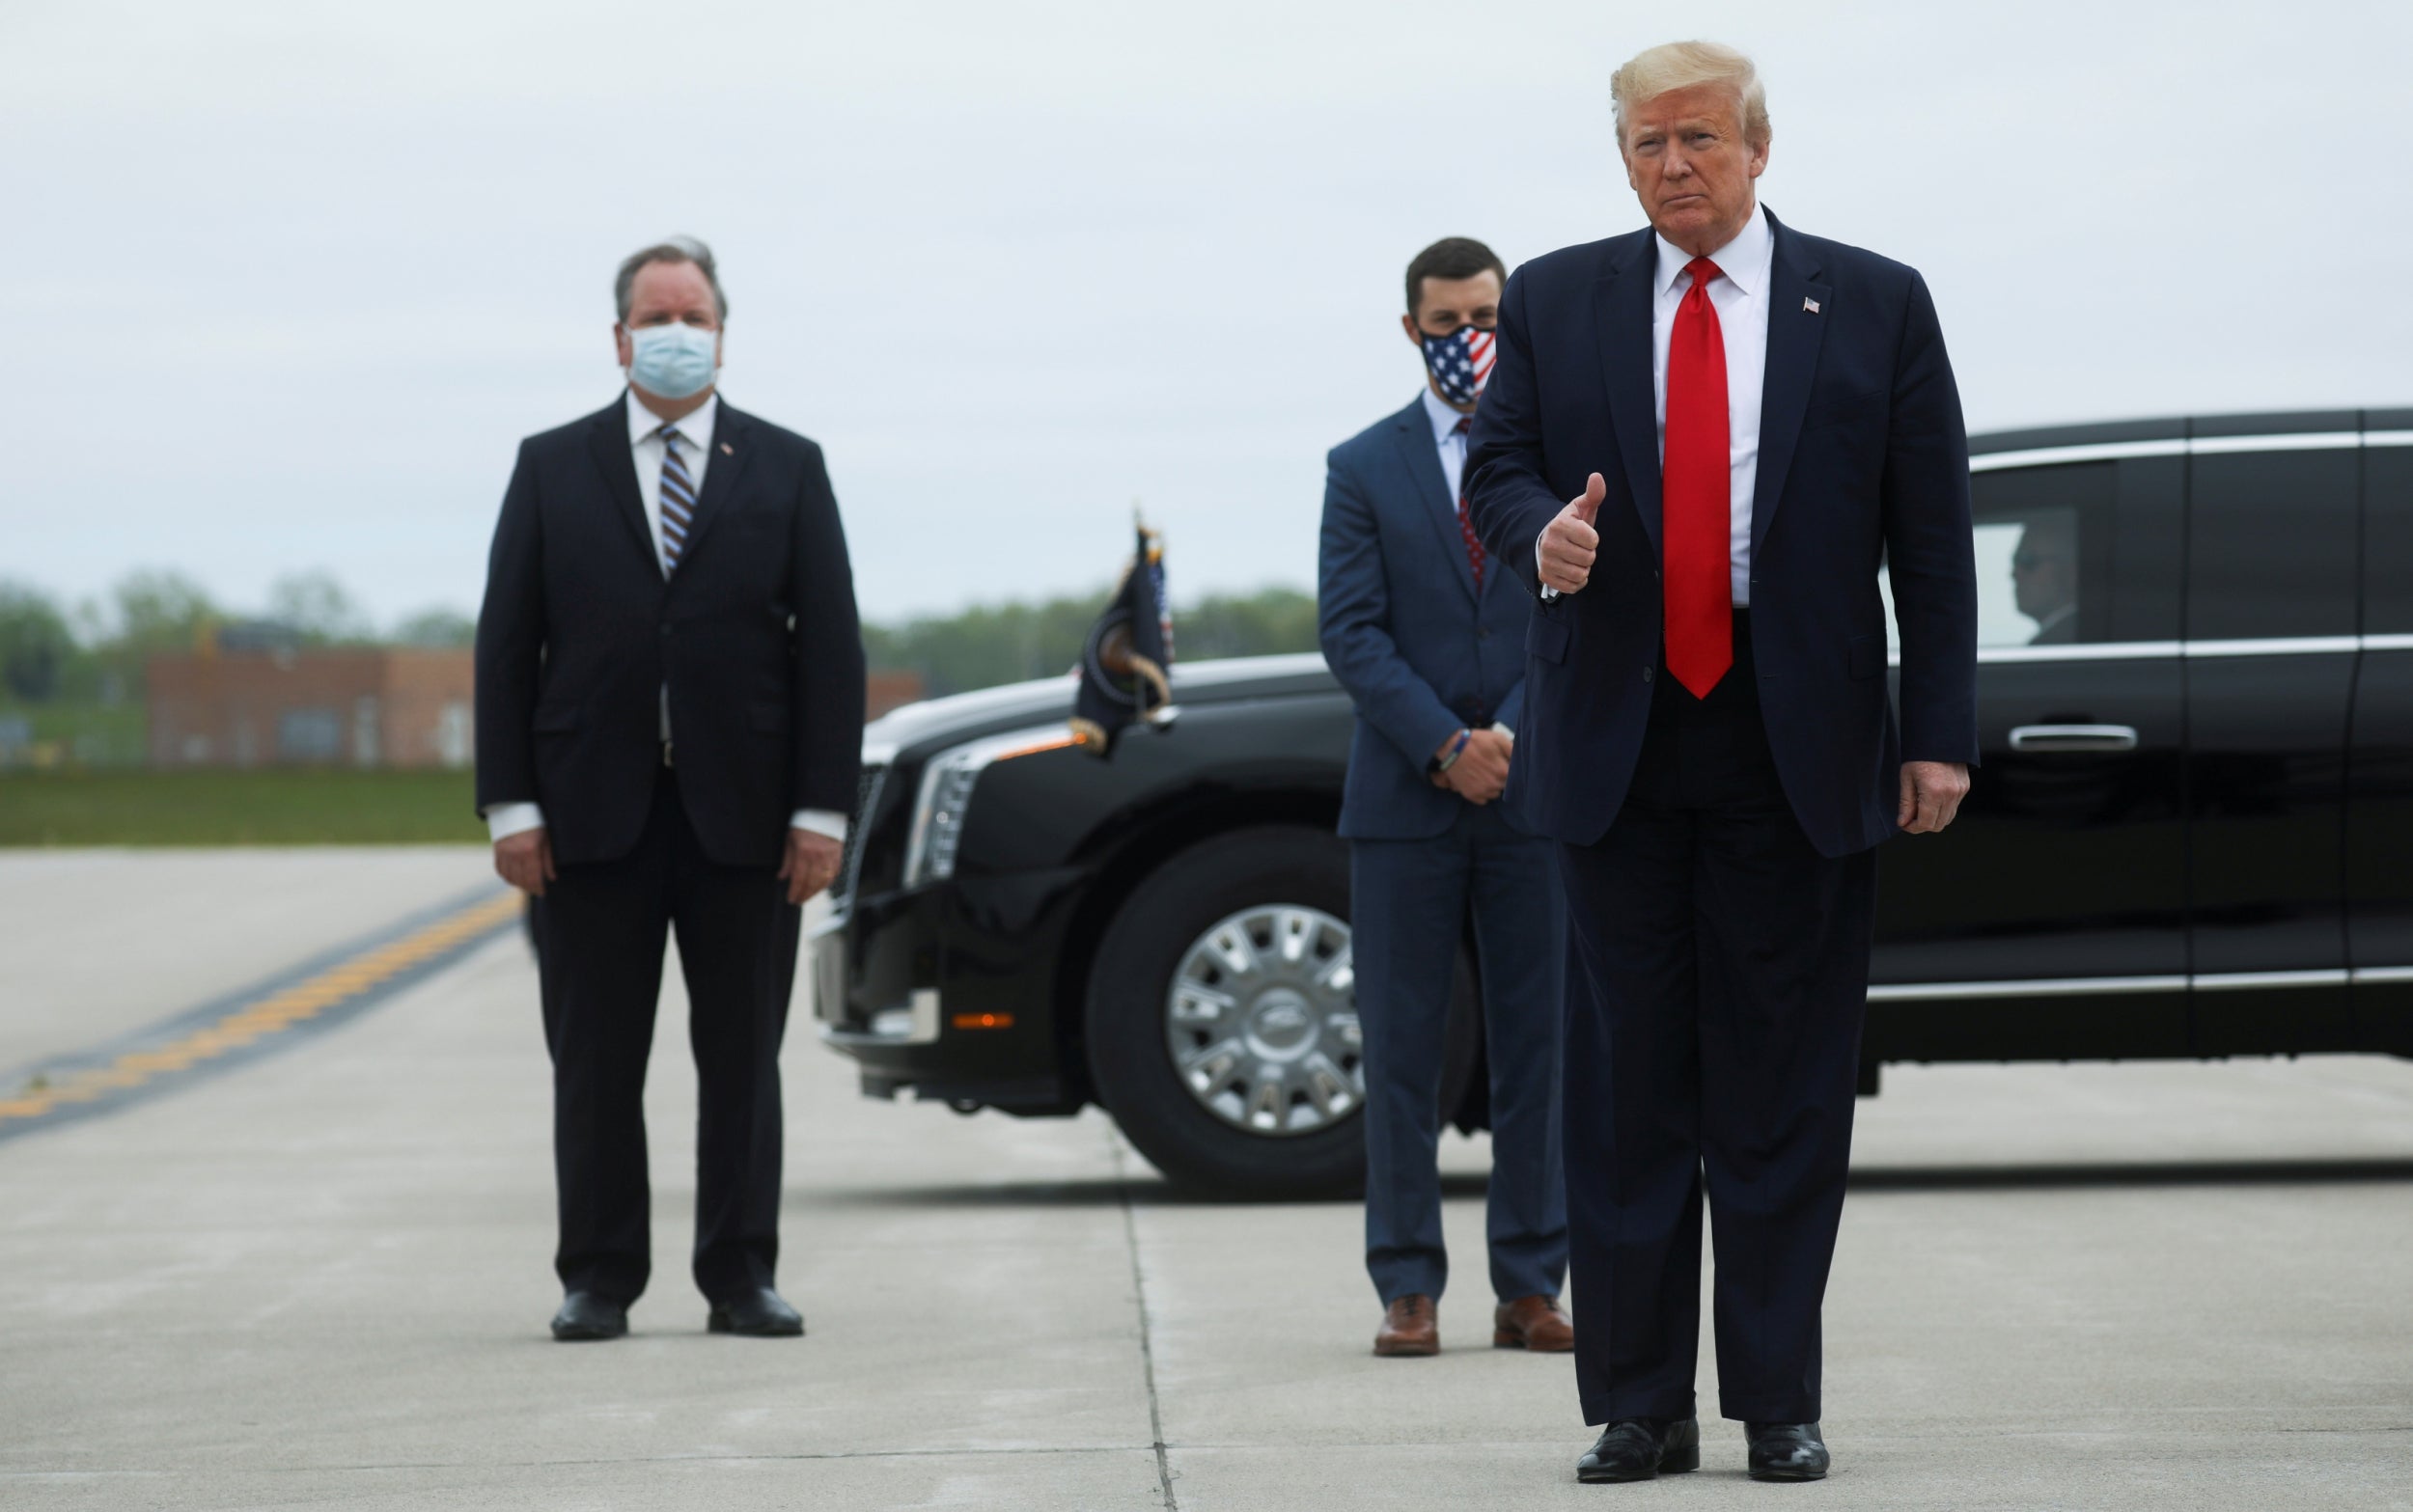 Donald Trump arrives at Detroit international airport on a visit to Michigan during the coronavirus pandemic